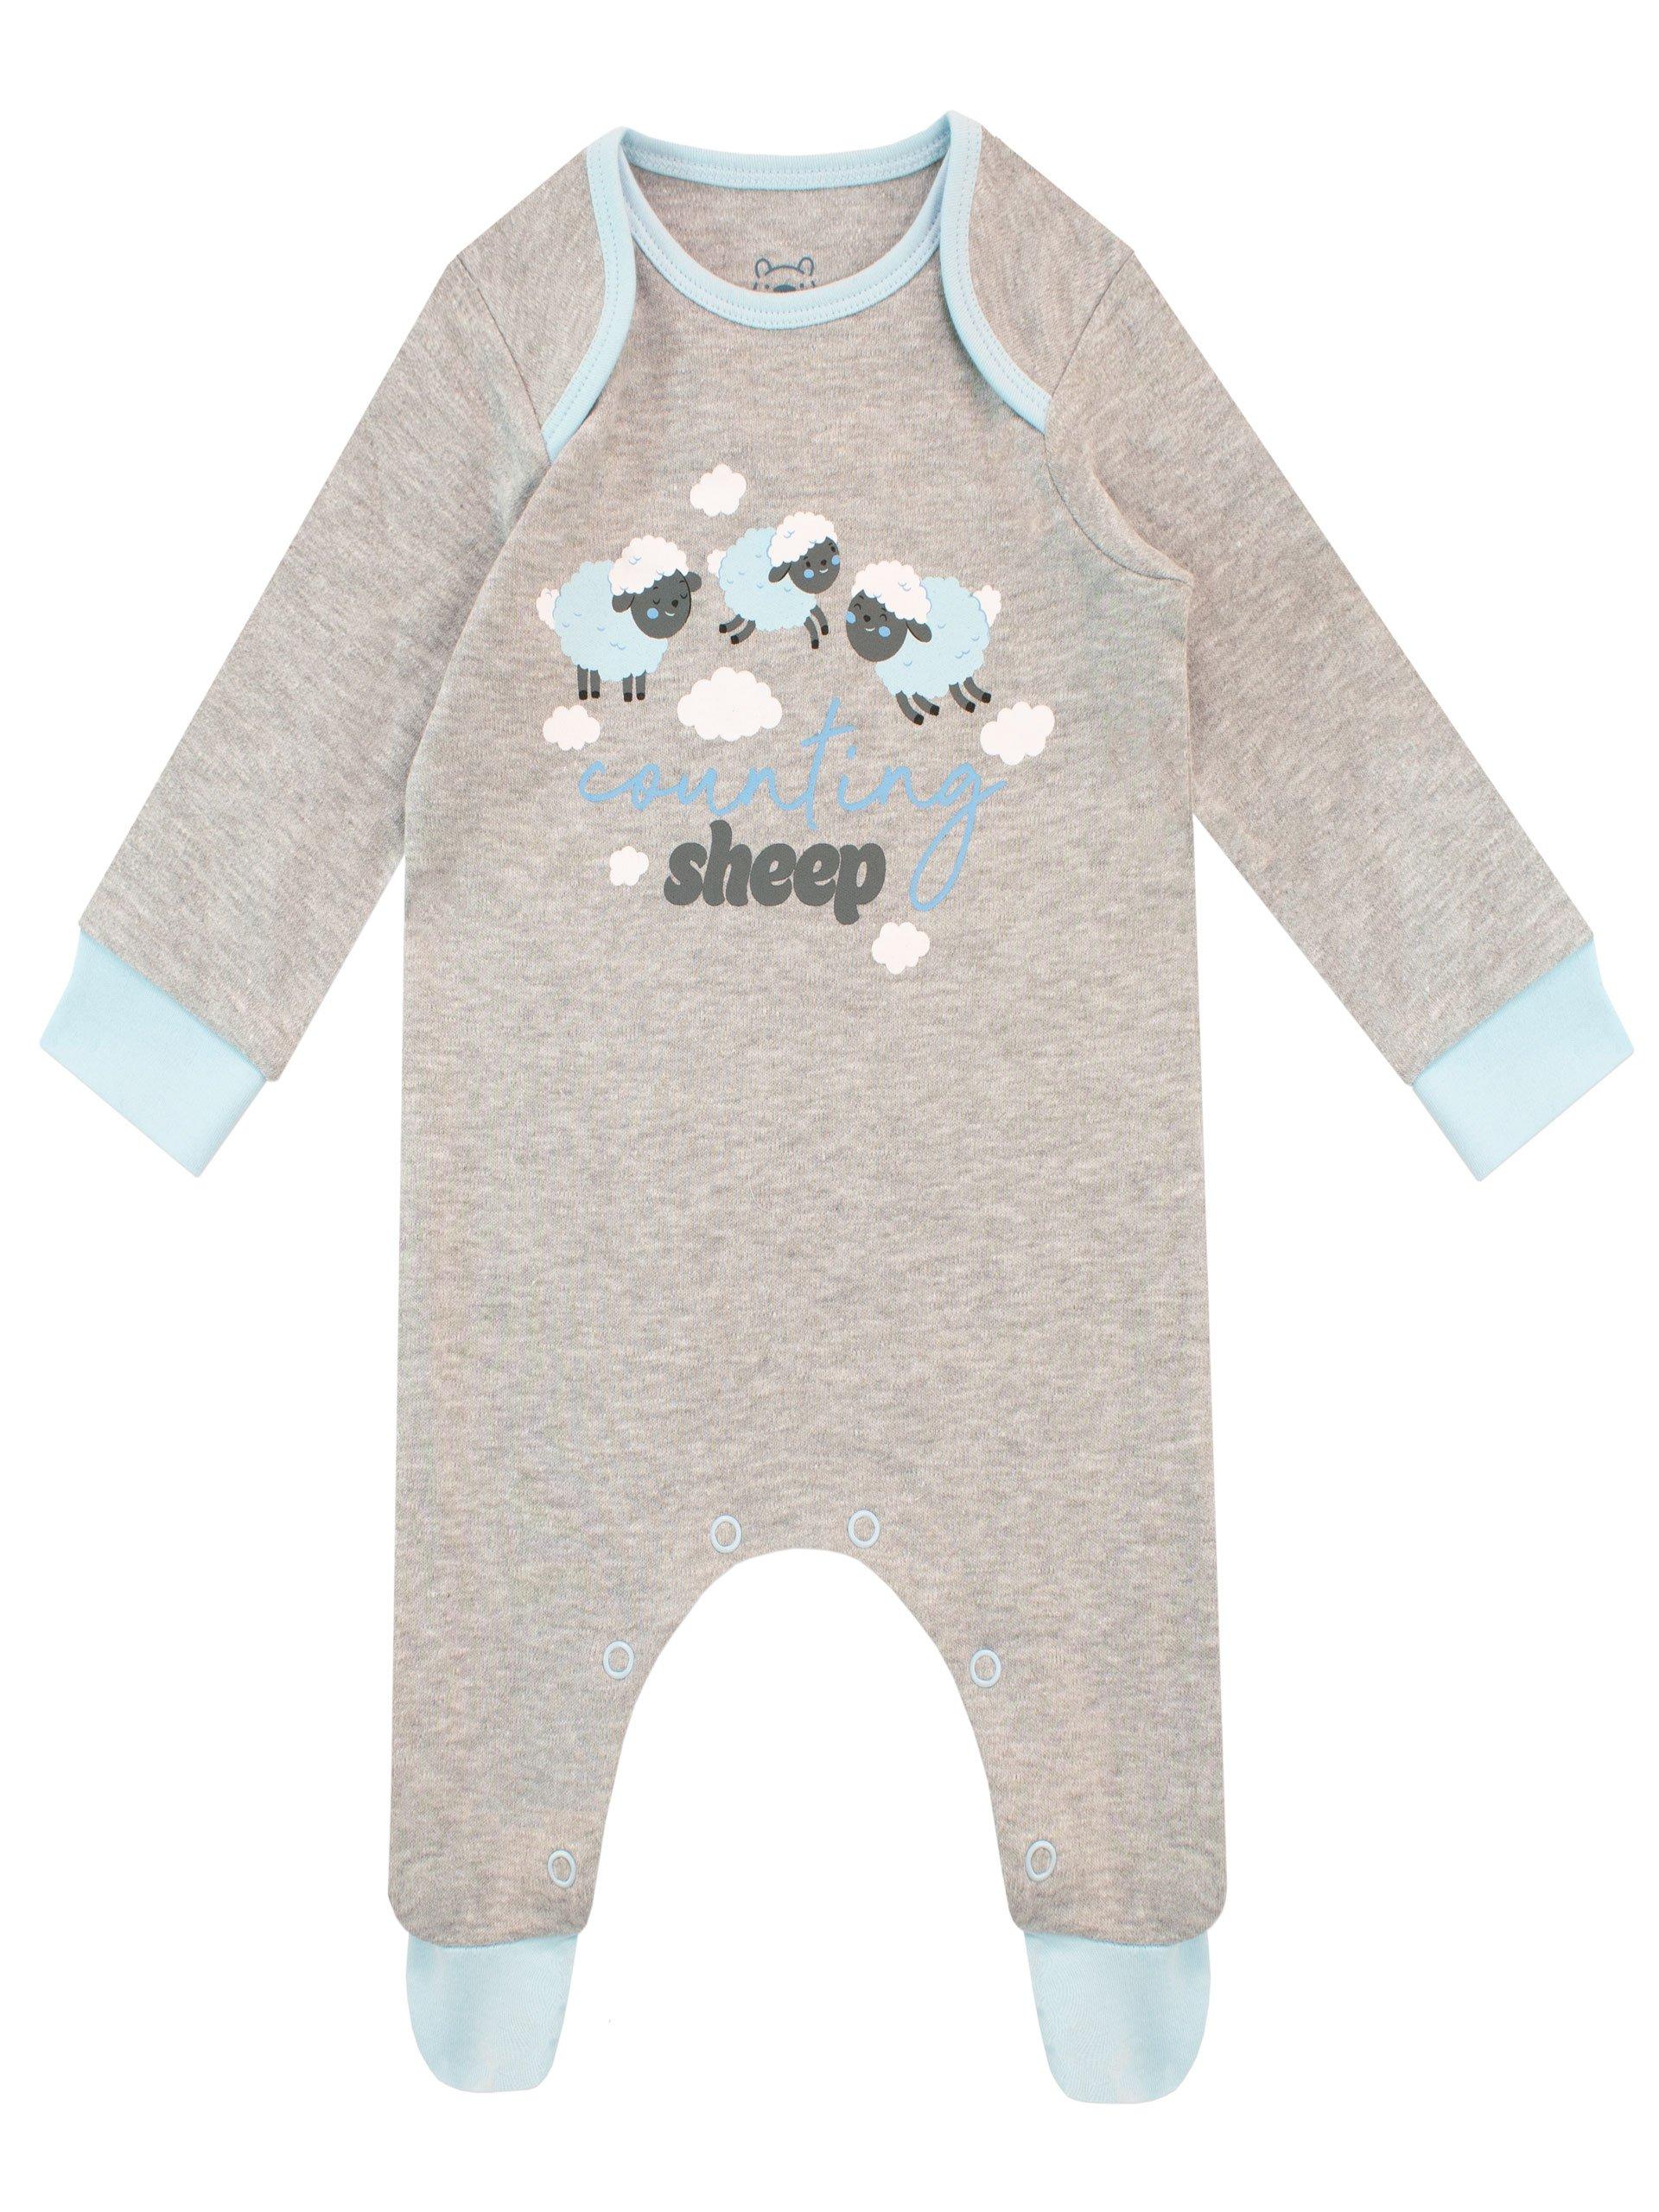 Counting Sheep Baby Sleepsuit